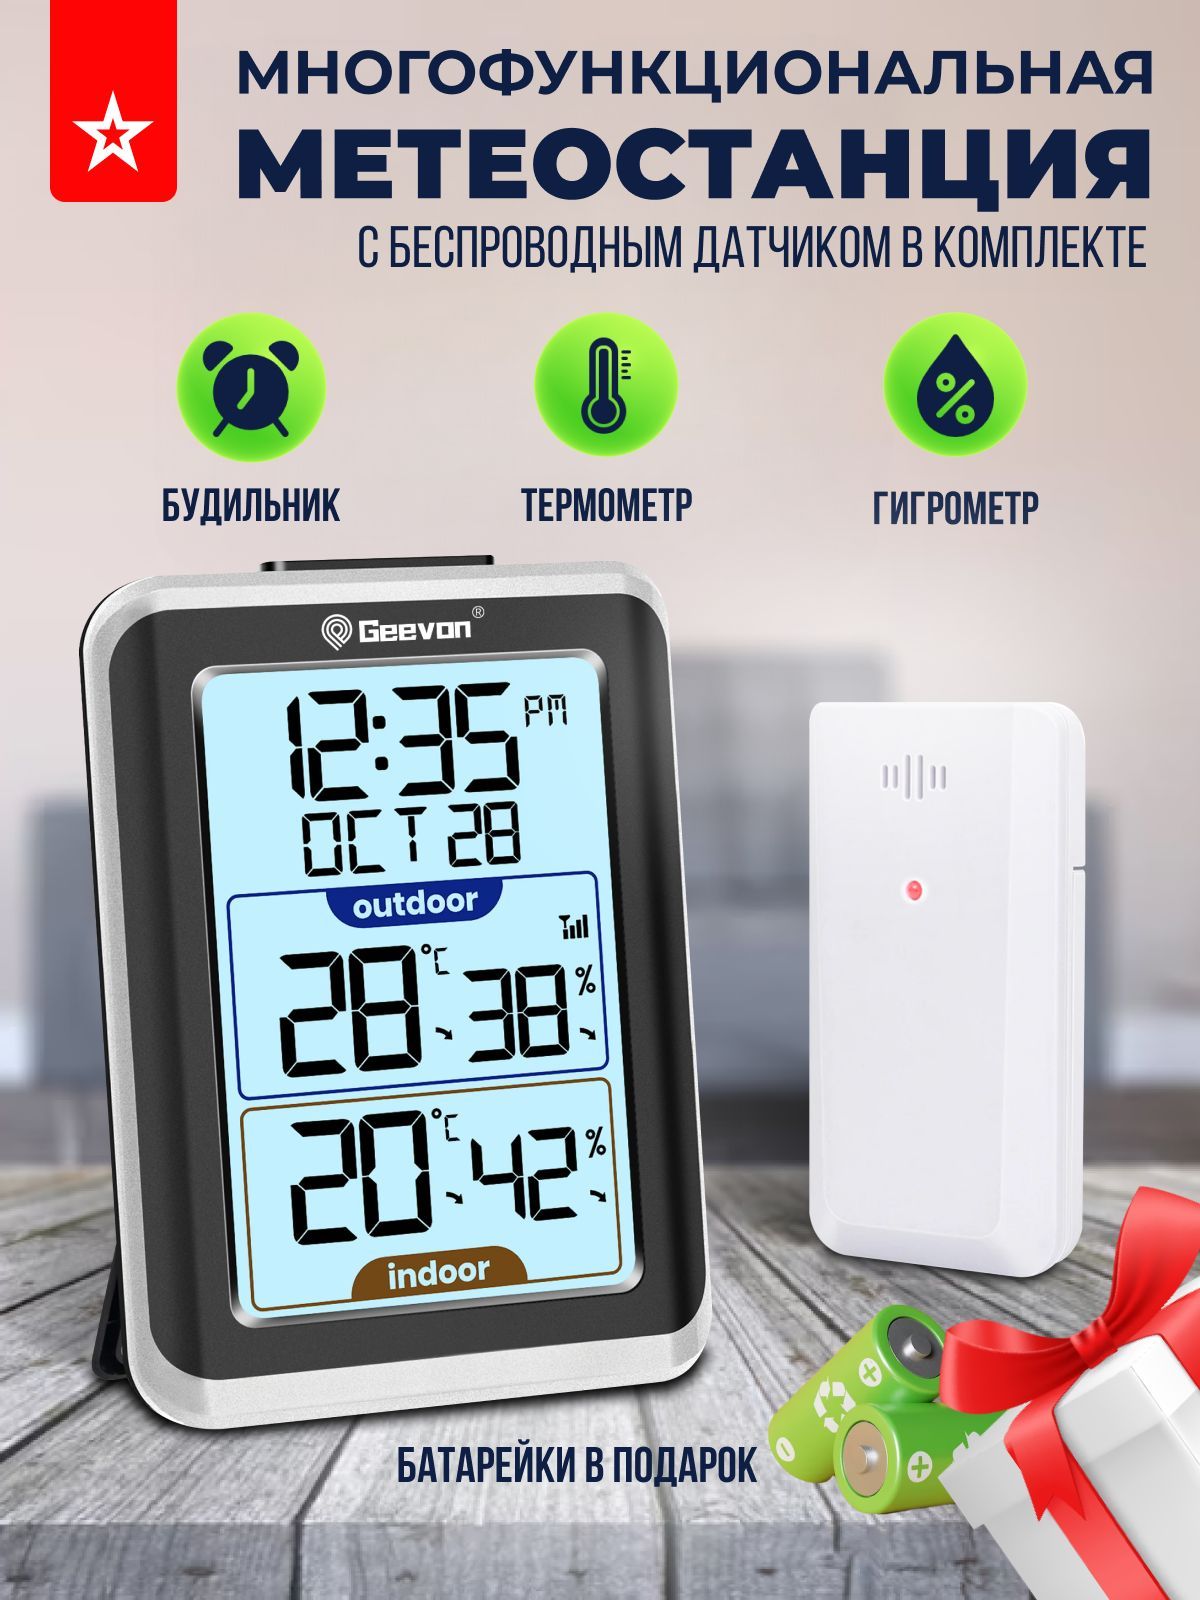 Метеостанция Xiaomi MiaoMiaoCE Measure Thermometer LCD (MHO-C601)